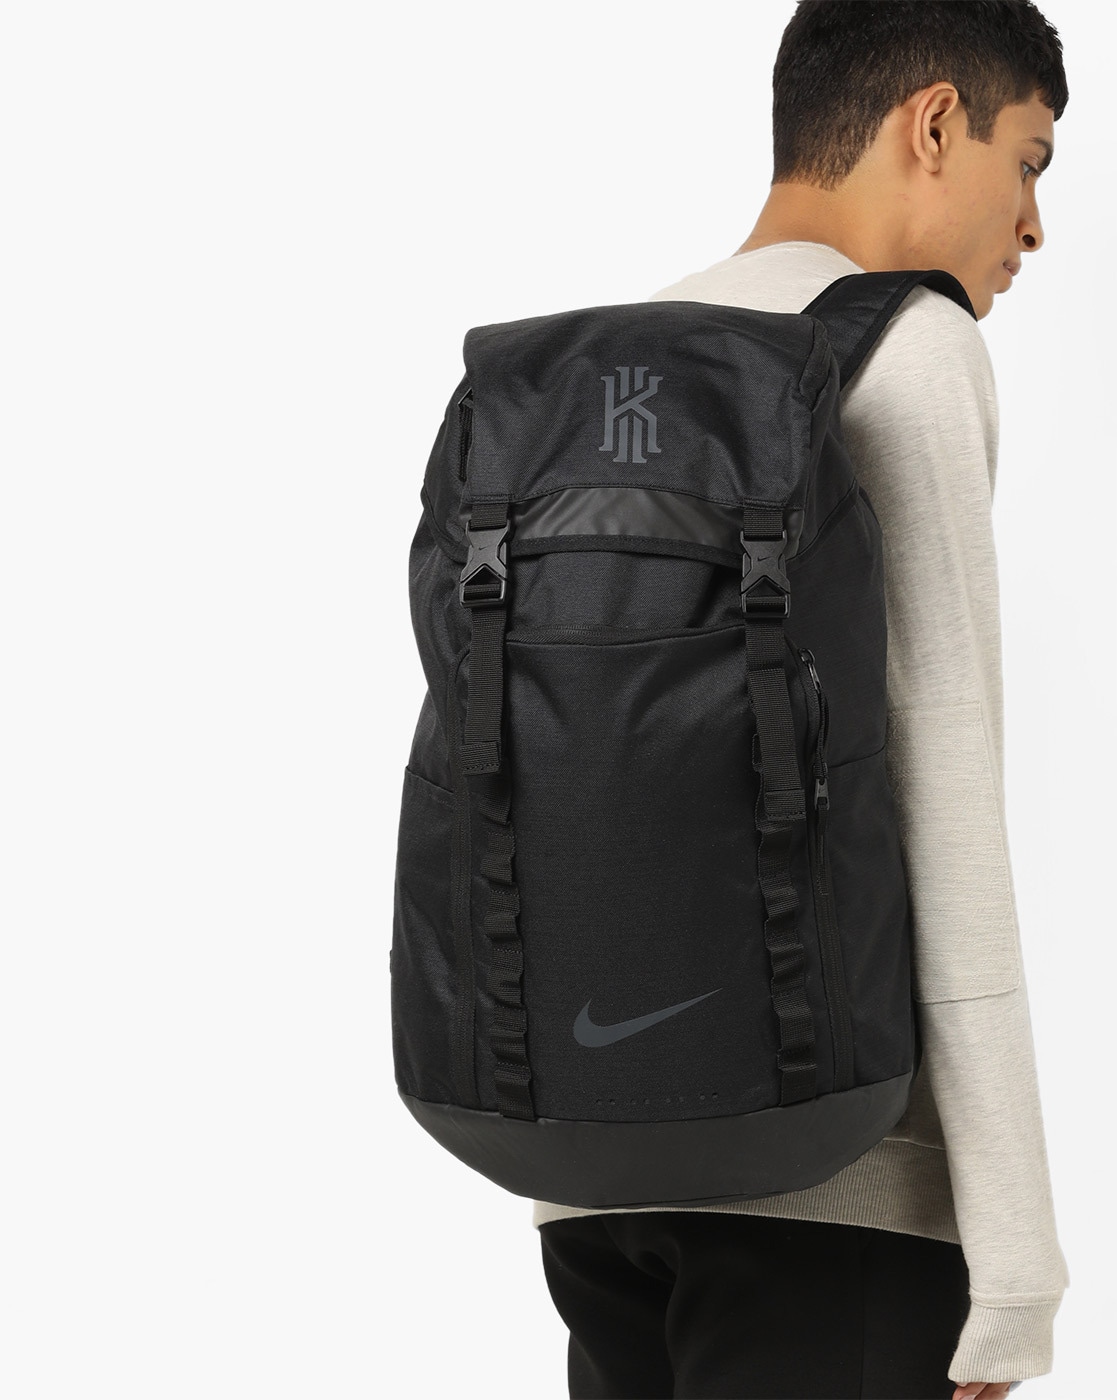 kyrie basketball backpack